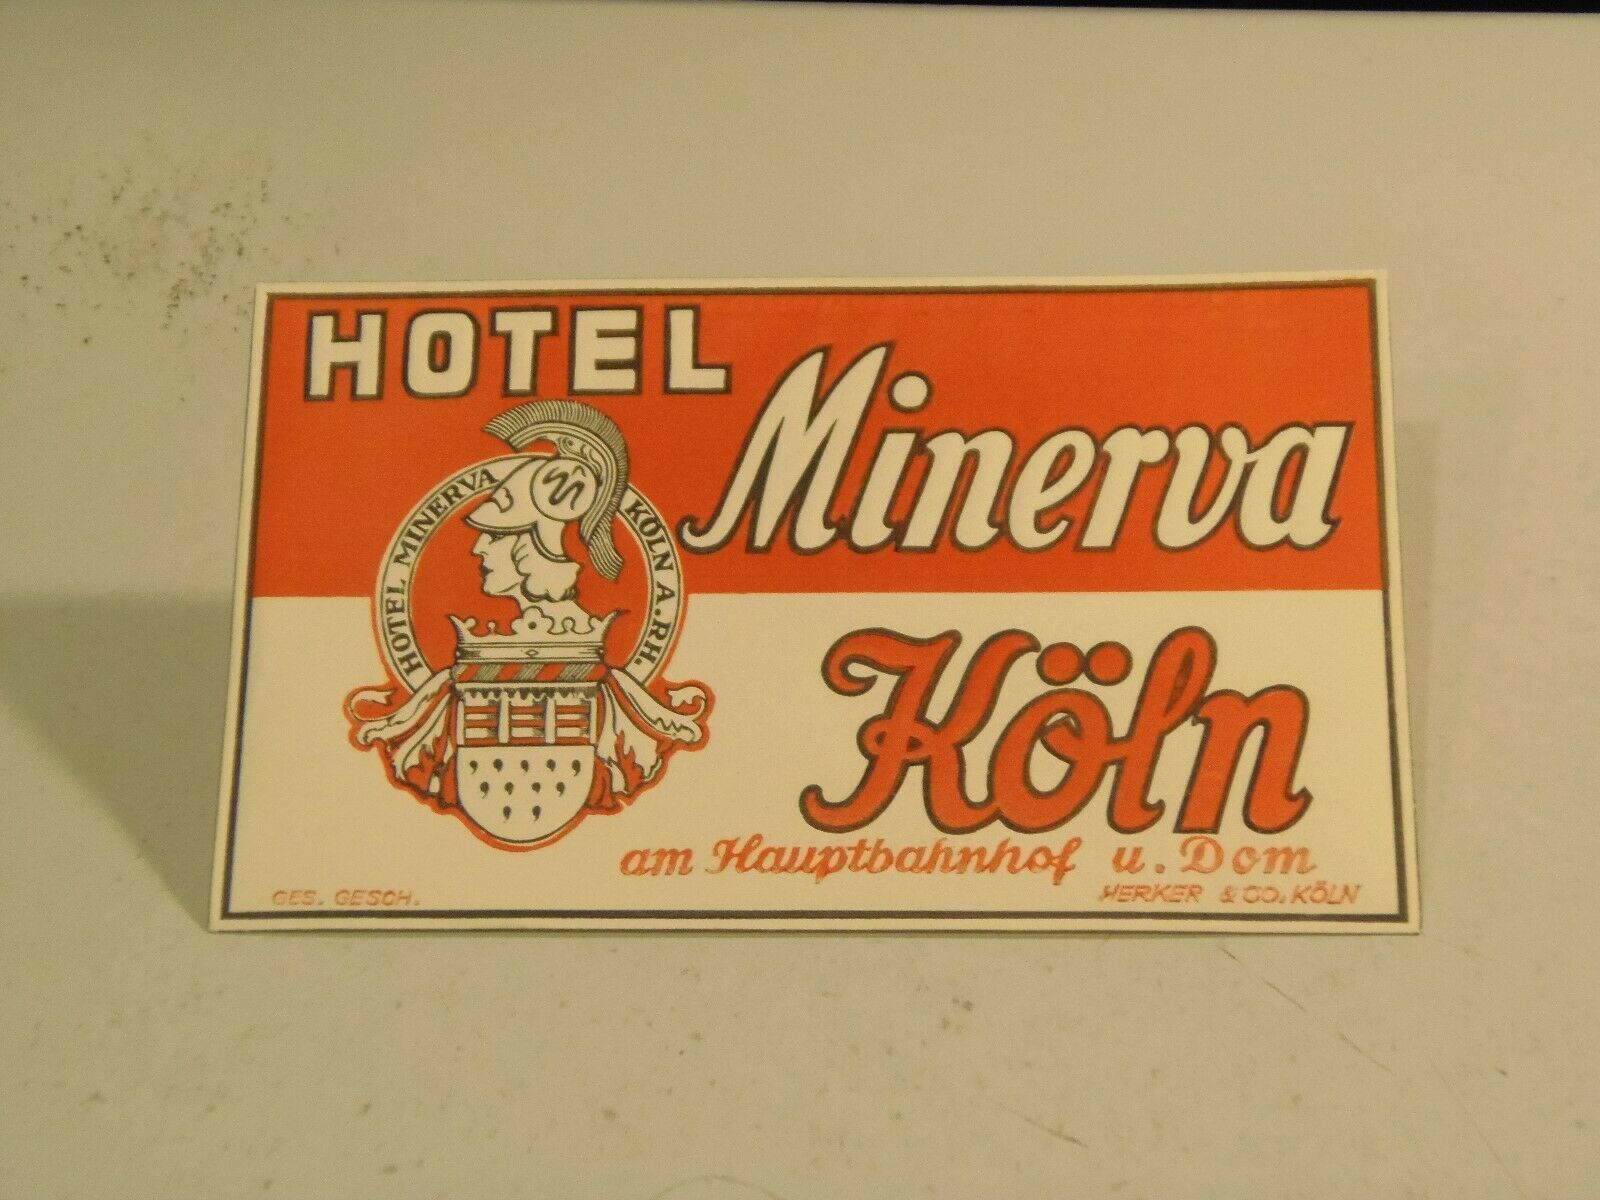 Hotel Minerva Koln Cologna Germany Vintage Luggage Label 3/8